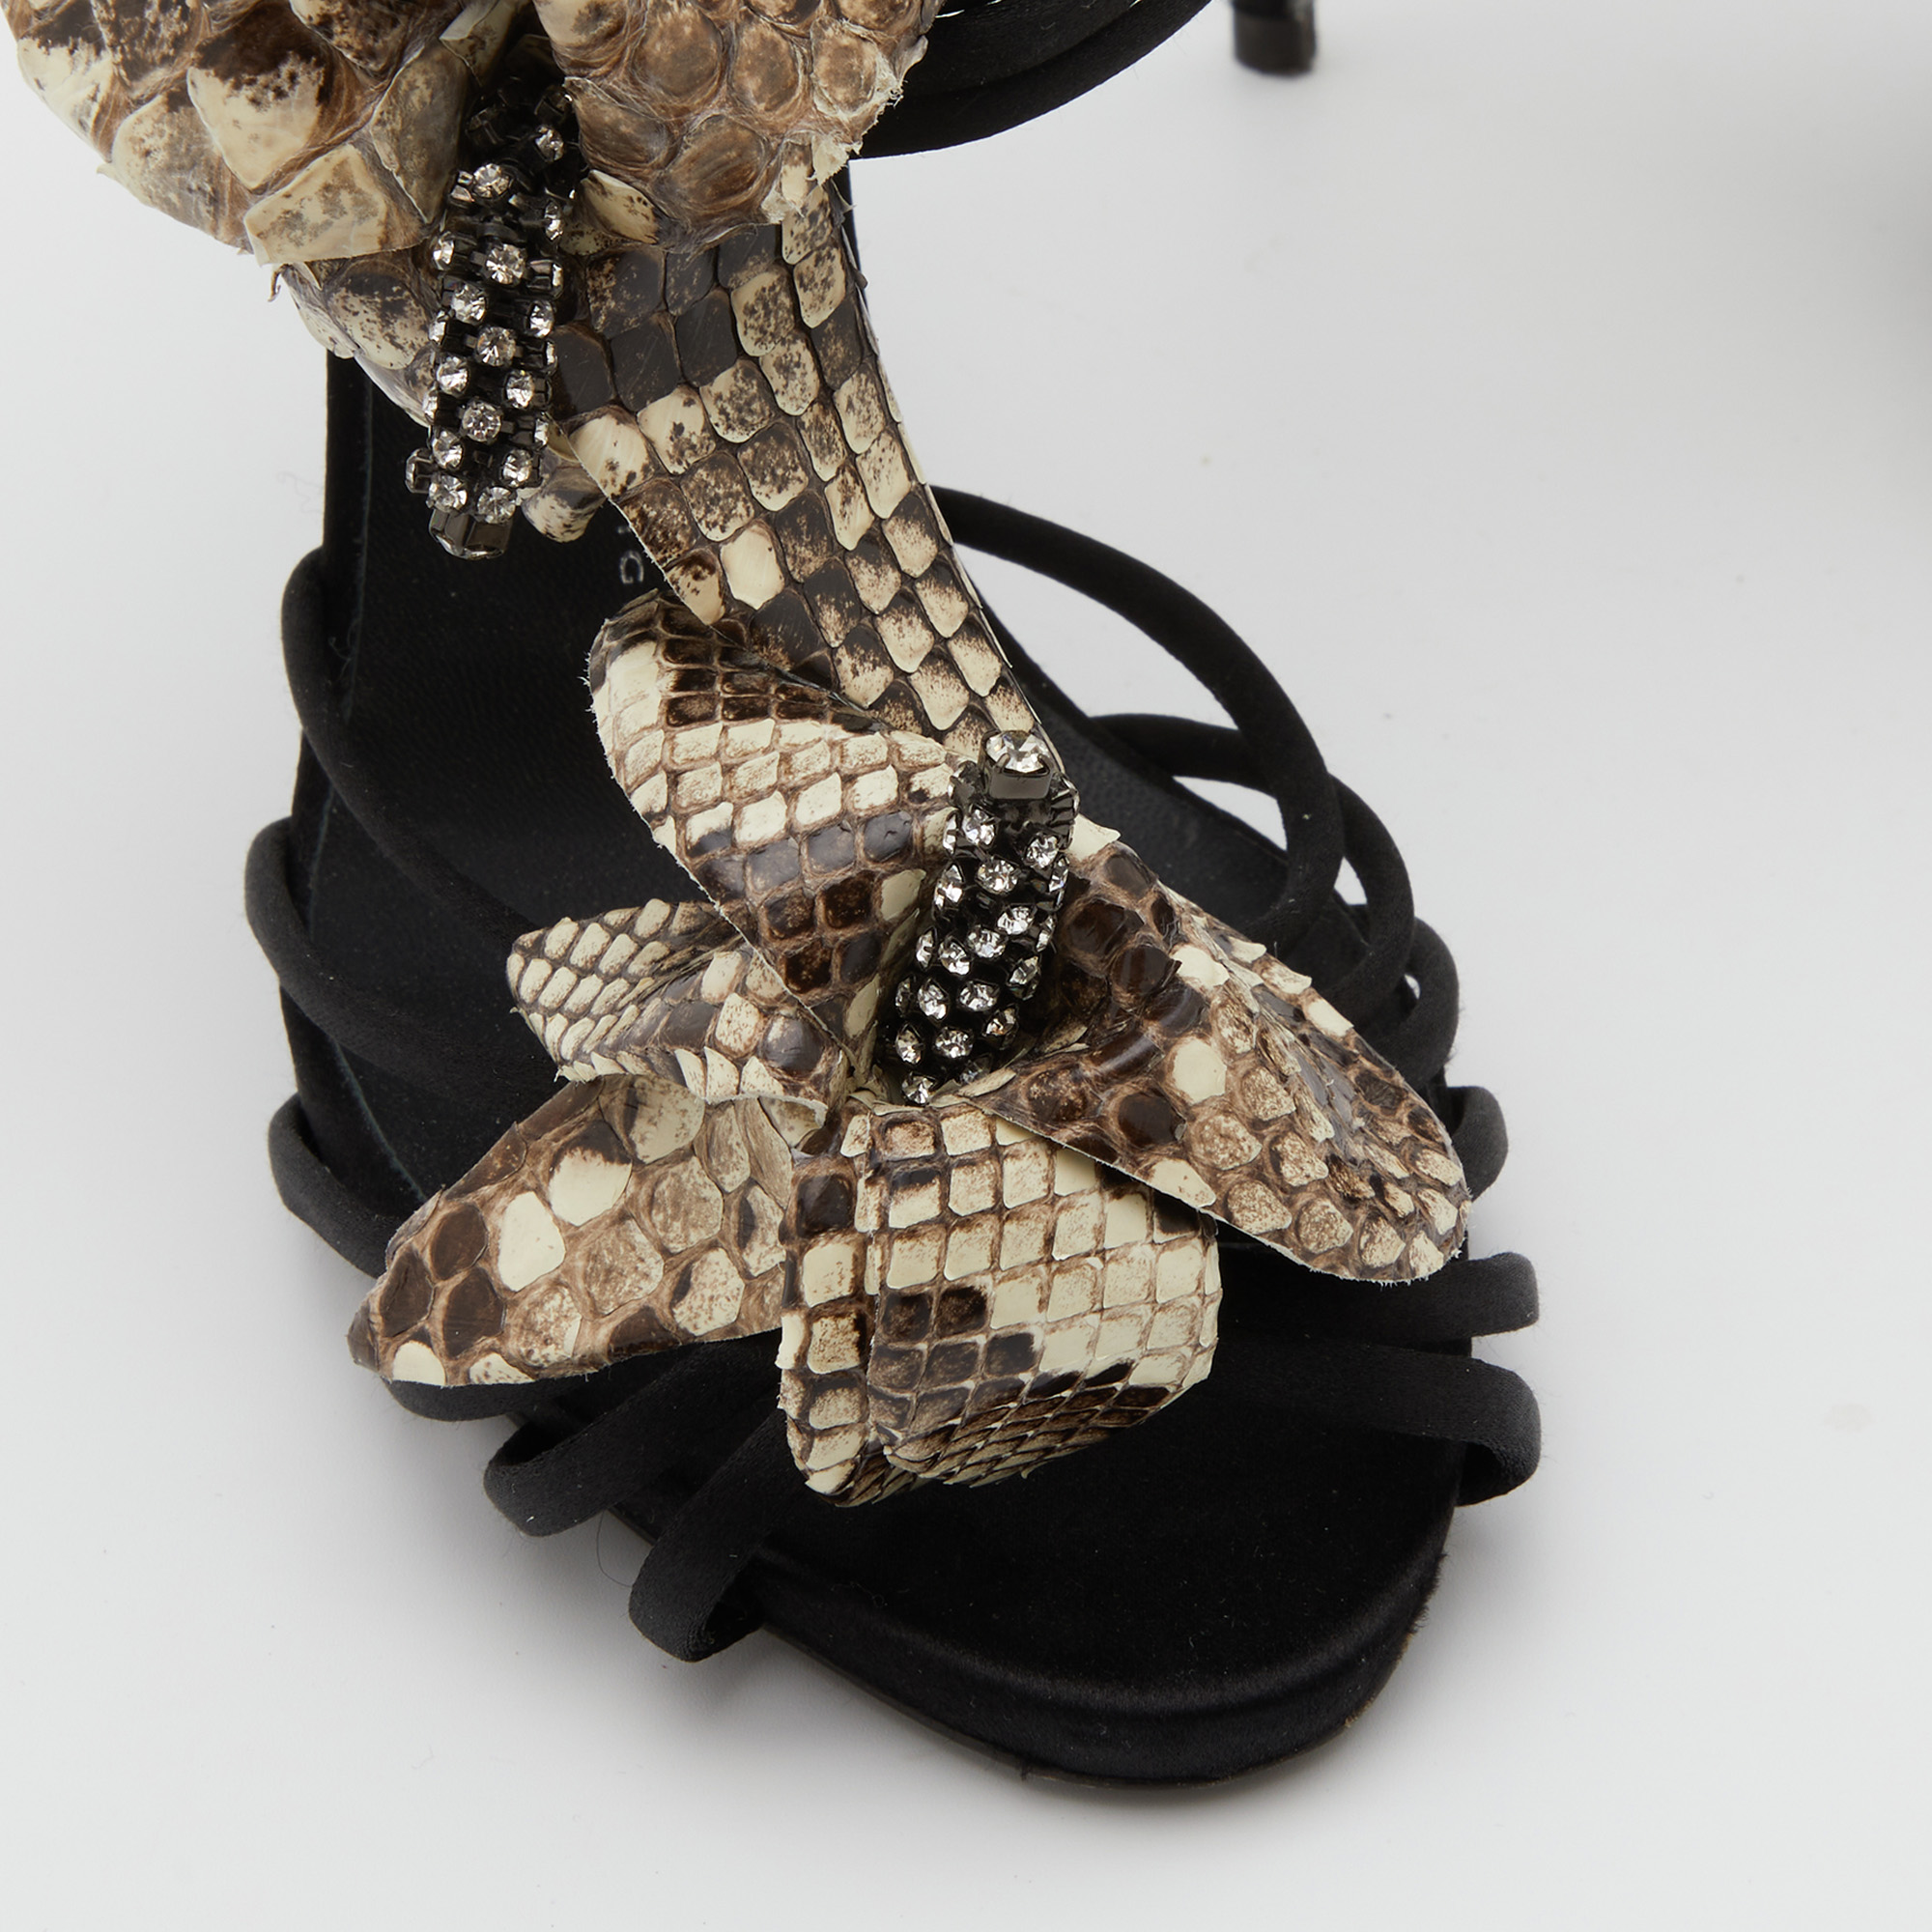 Giuseppe Zanotti Black/Beige Satin And Python Leather Flower Applique Ankle Strap Sandals Size 38.5